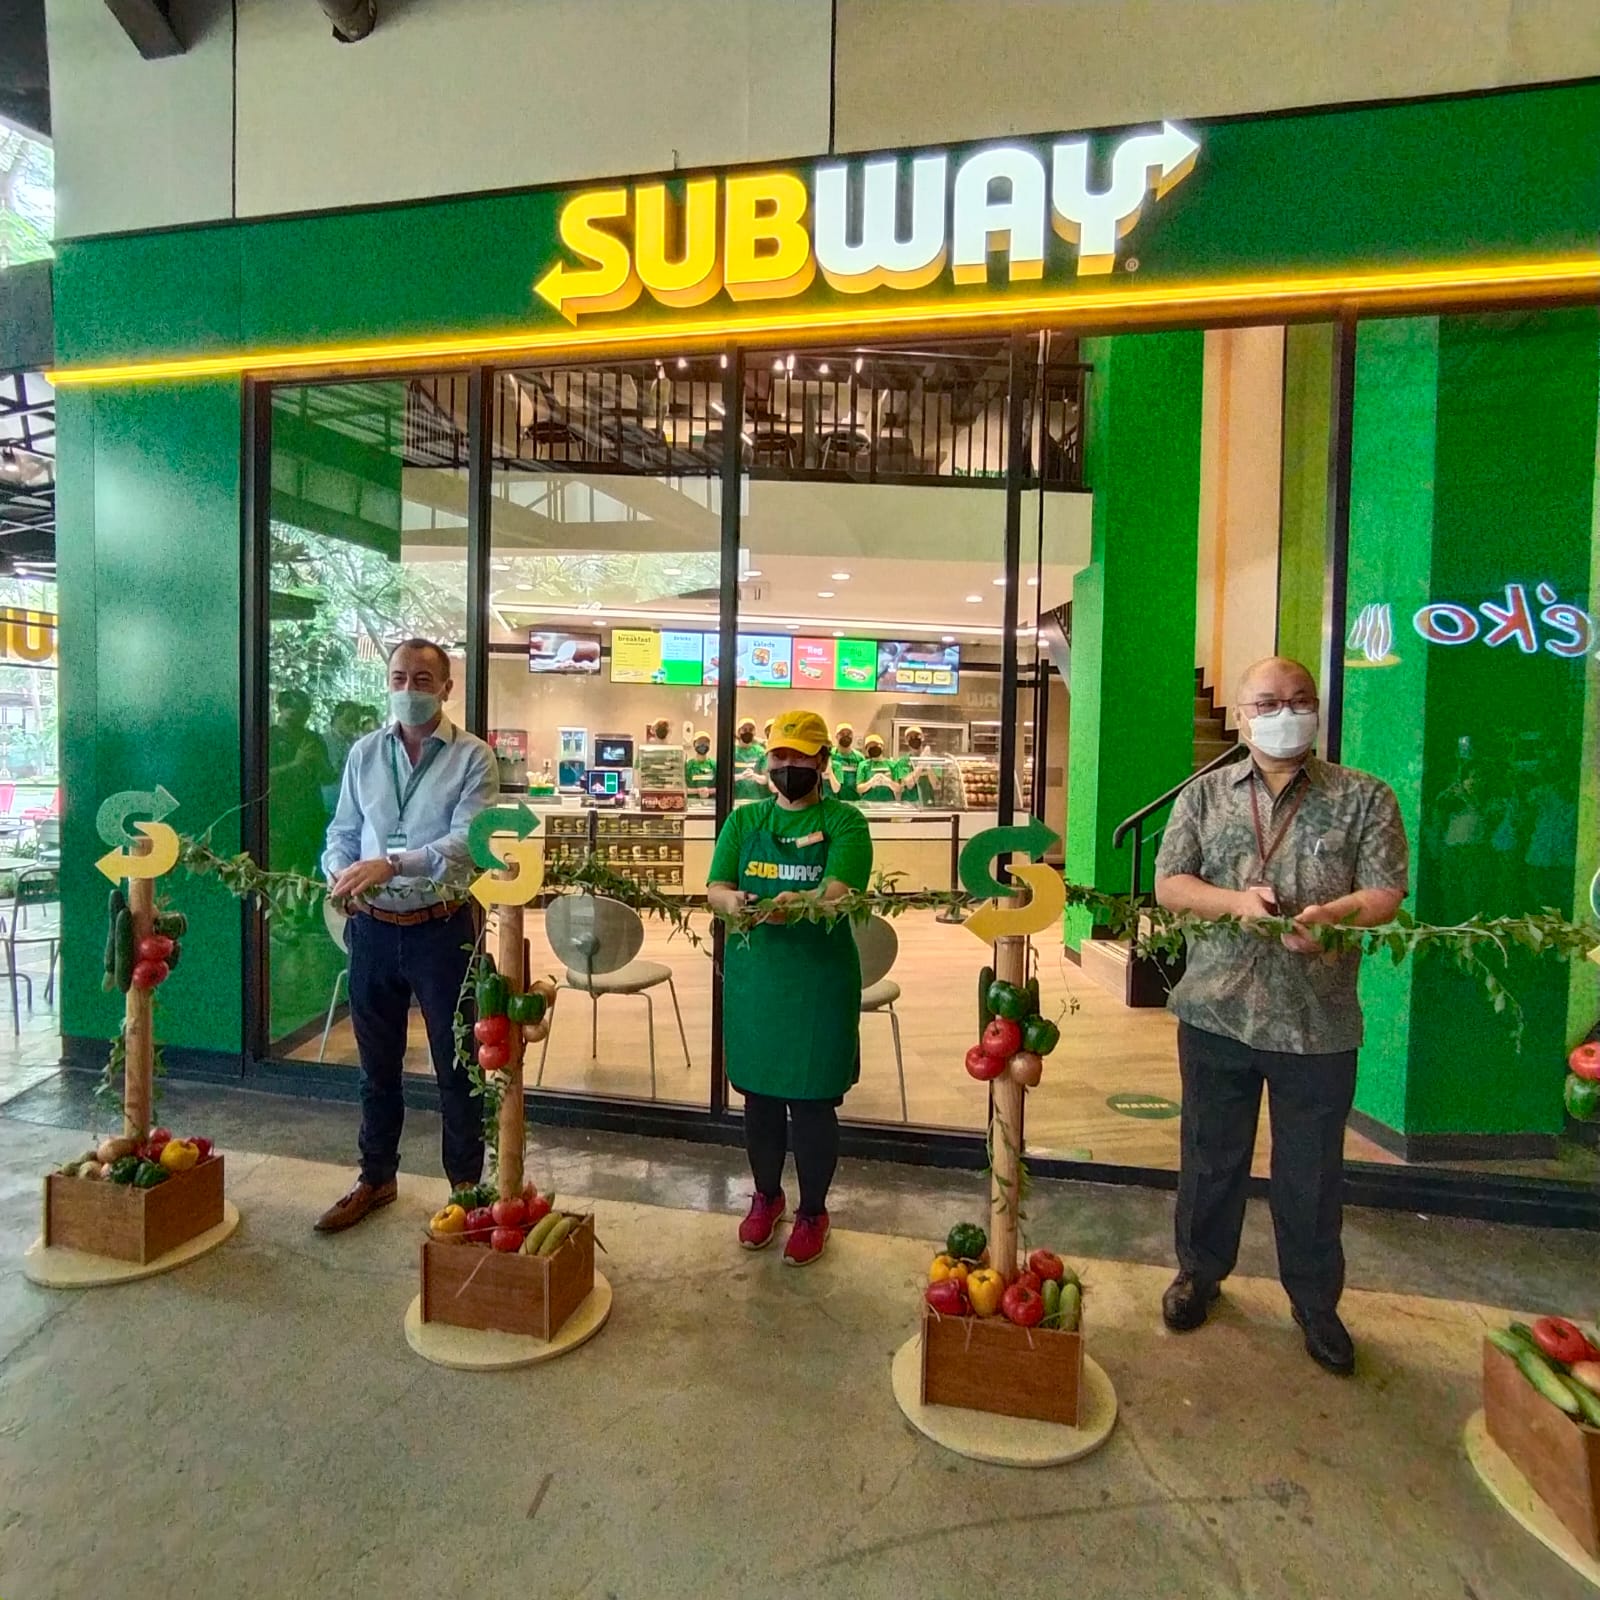 Opening Subway